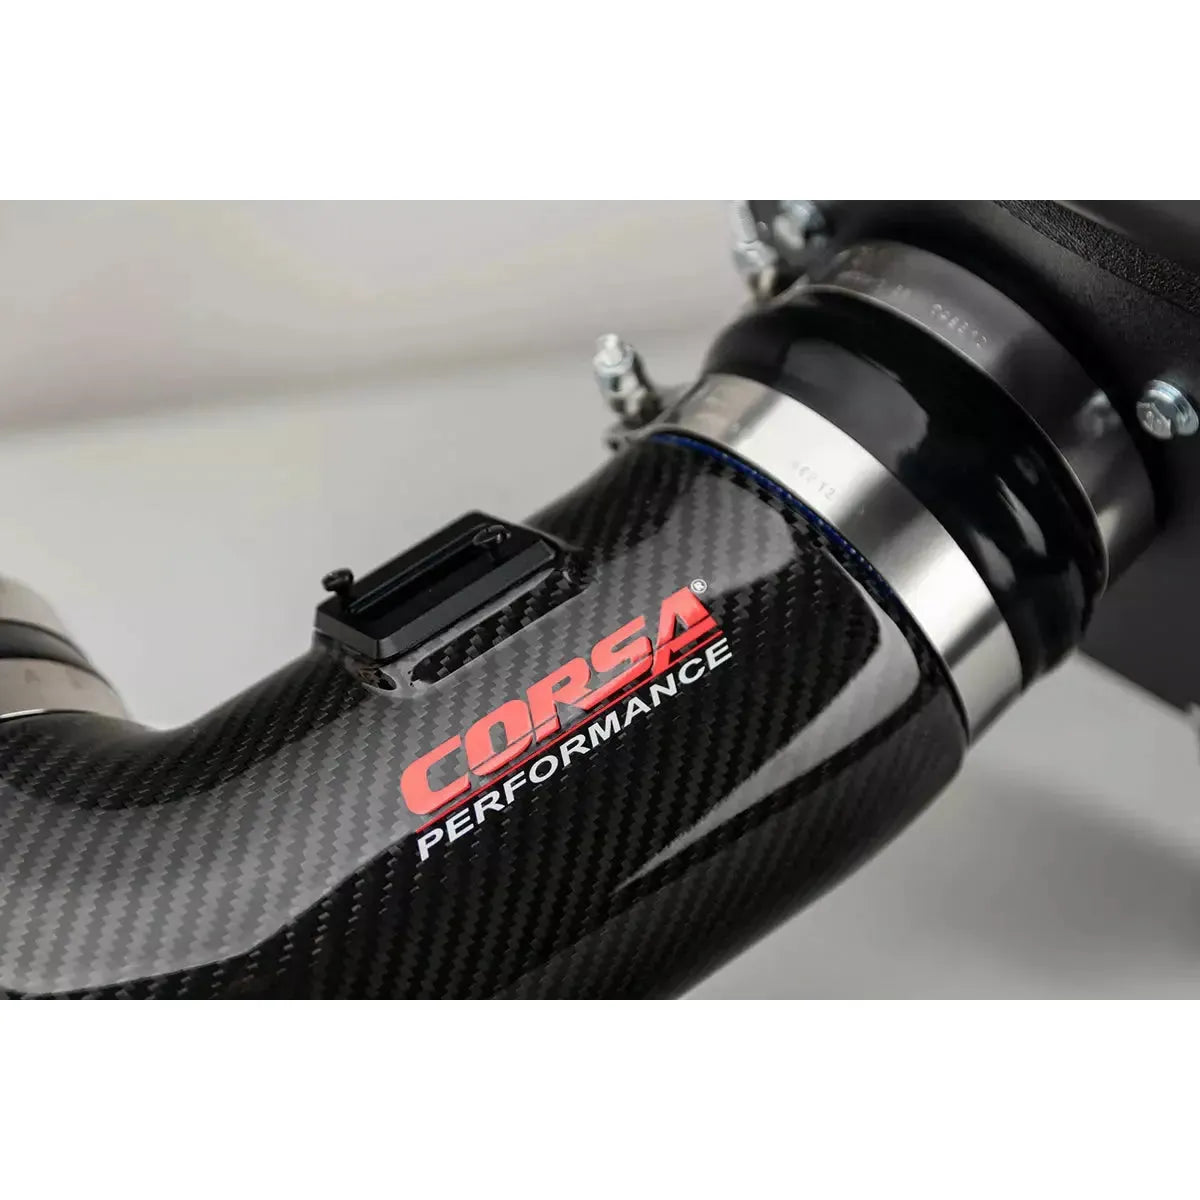 2017-2023 Chevrolet ZL1 | CORSA Performance Carbon Fiber Air Intake